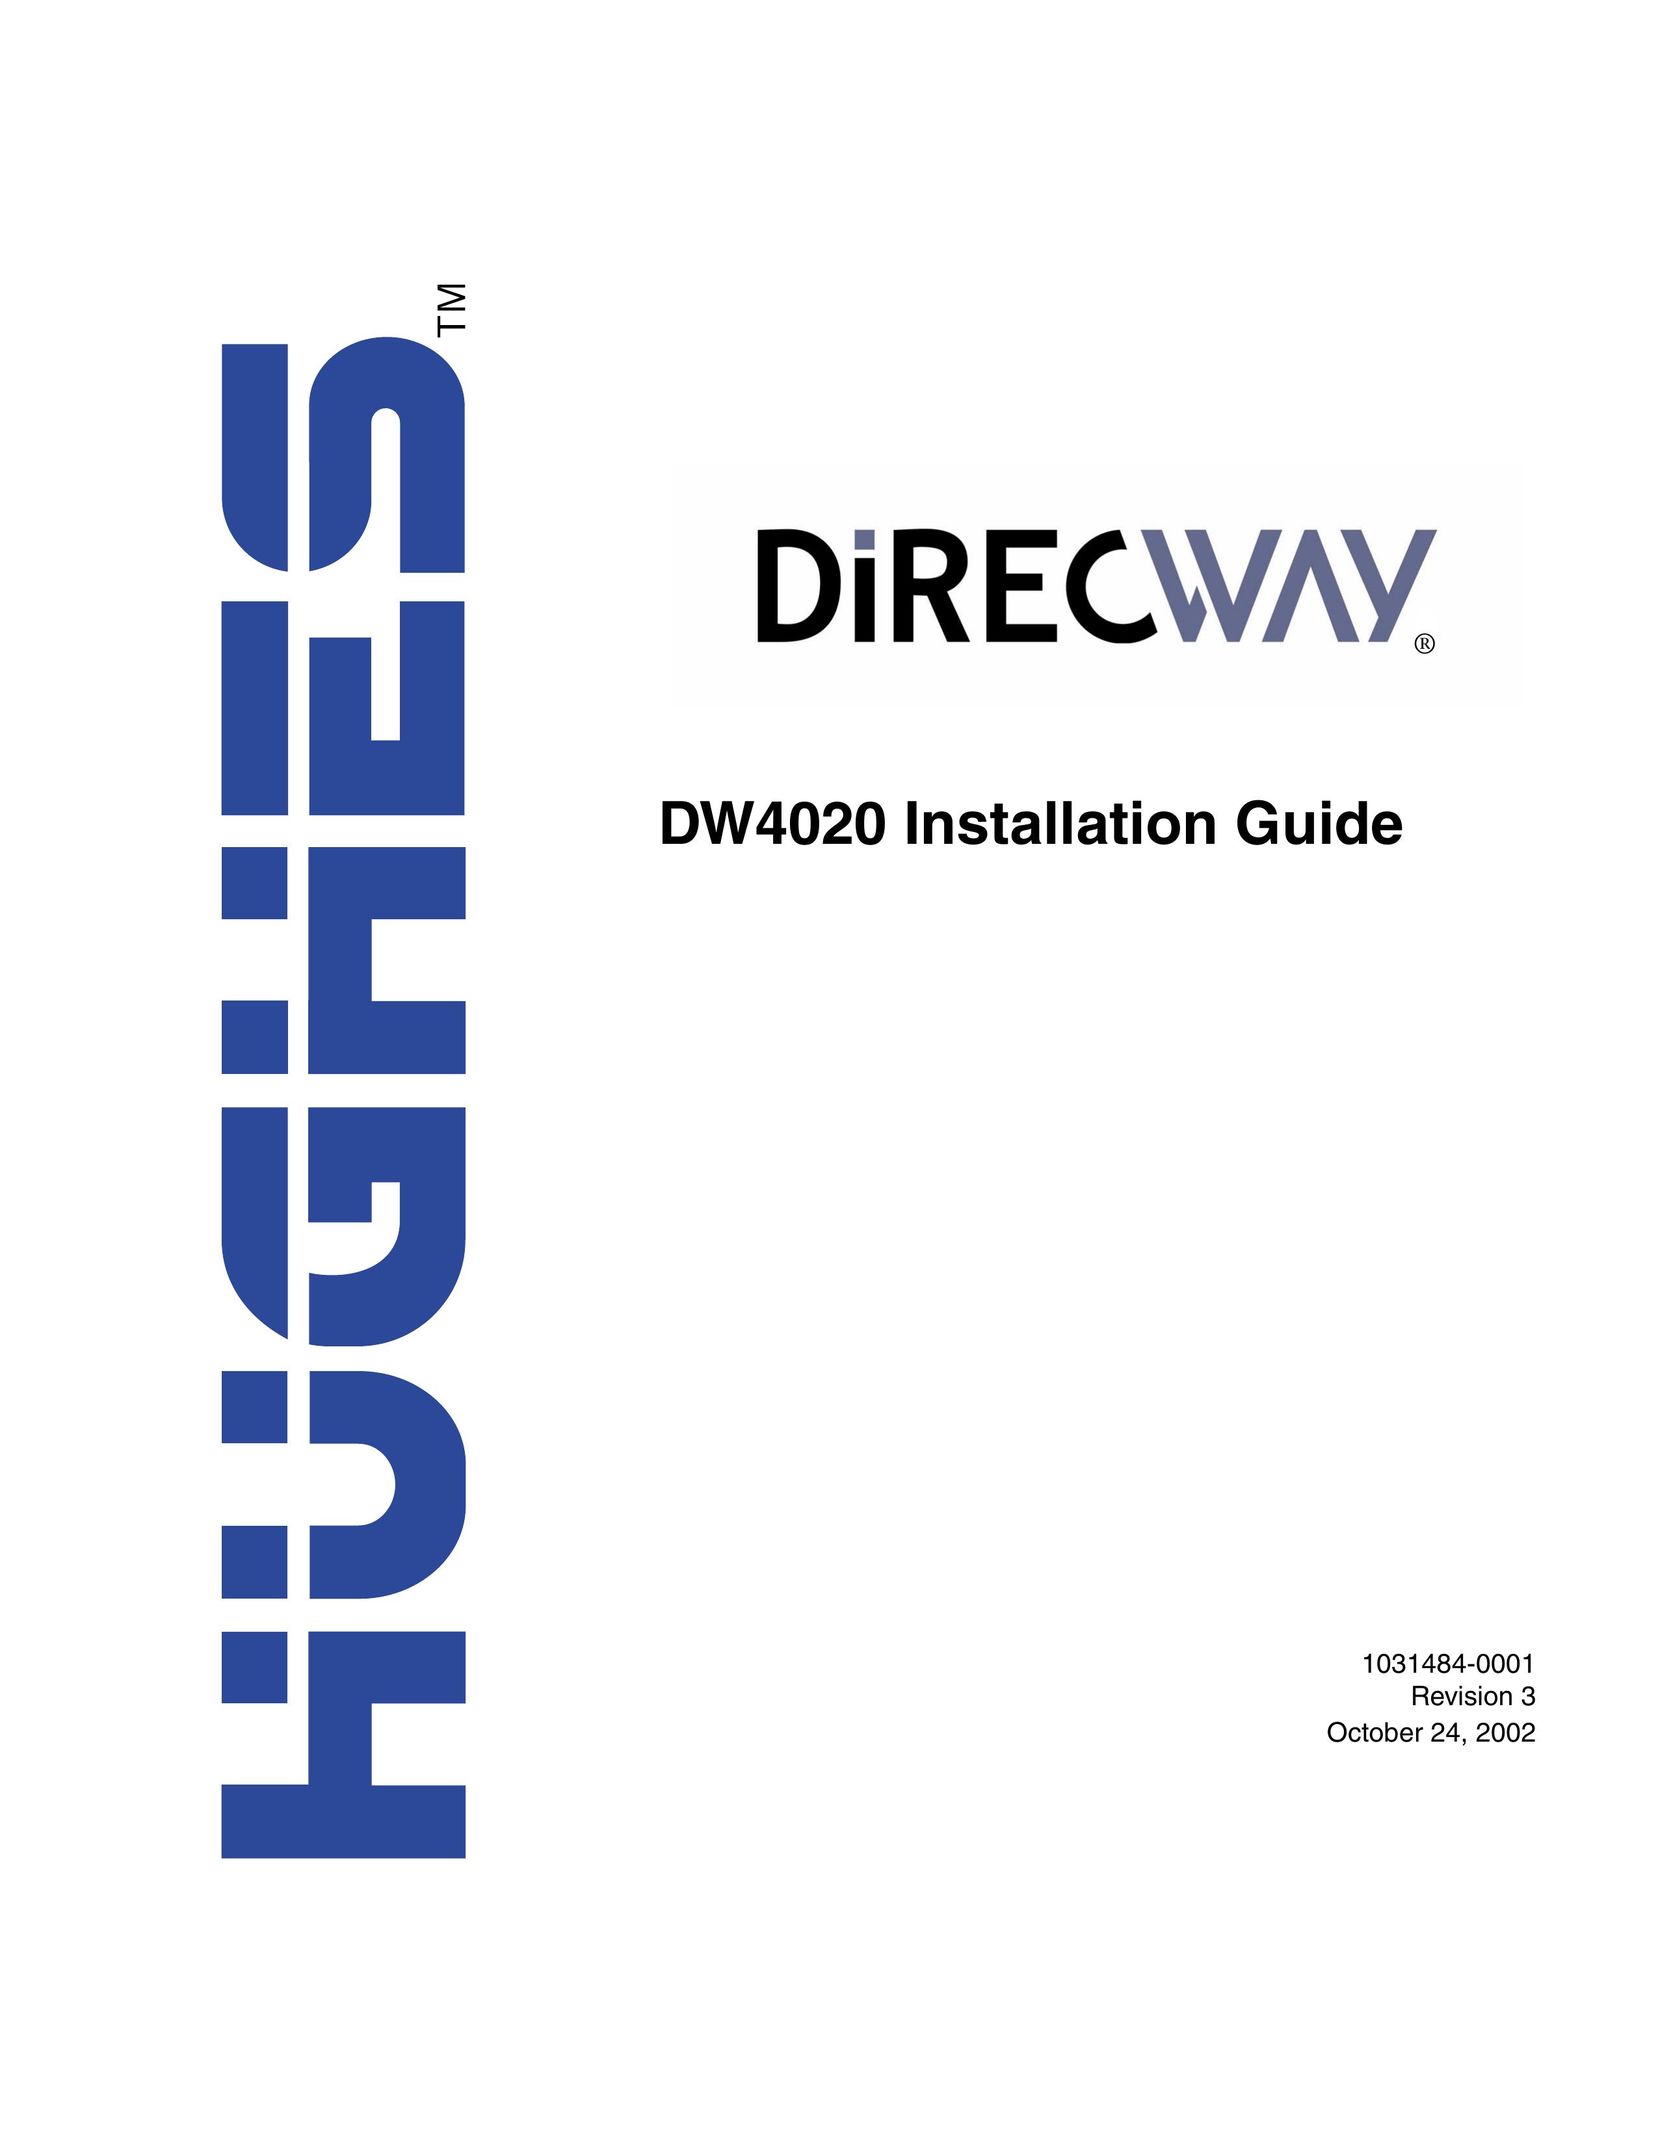 Hughes DW4020 Network Hardware User Manual